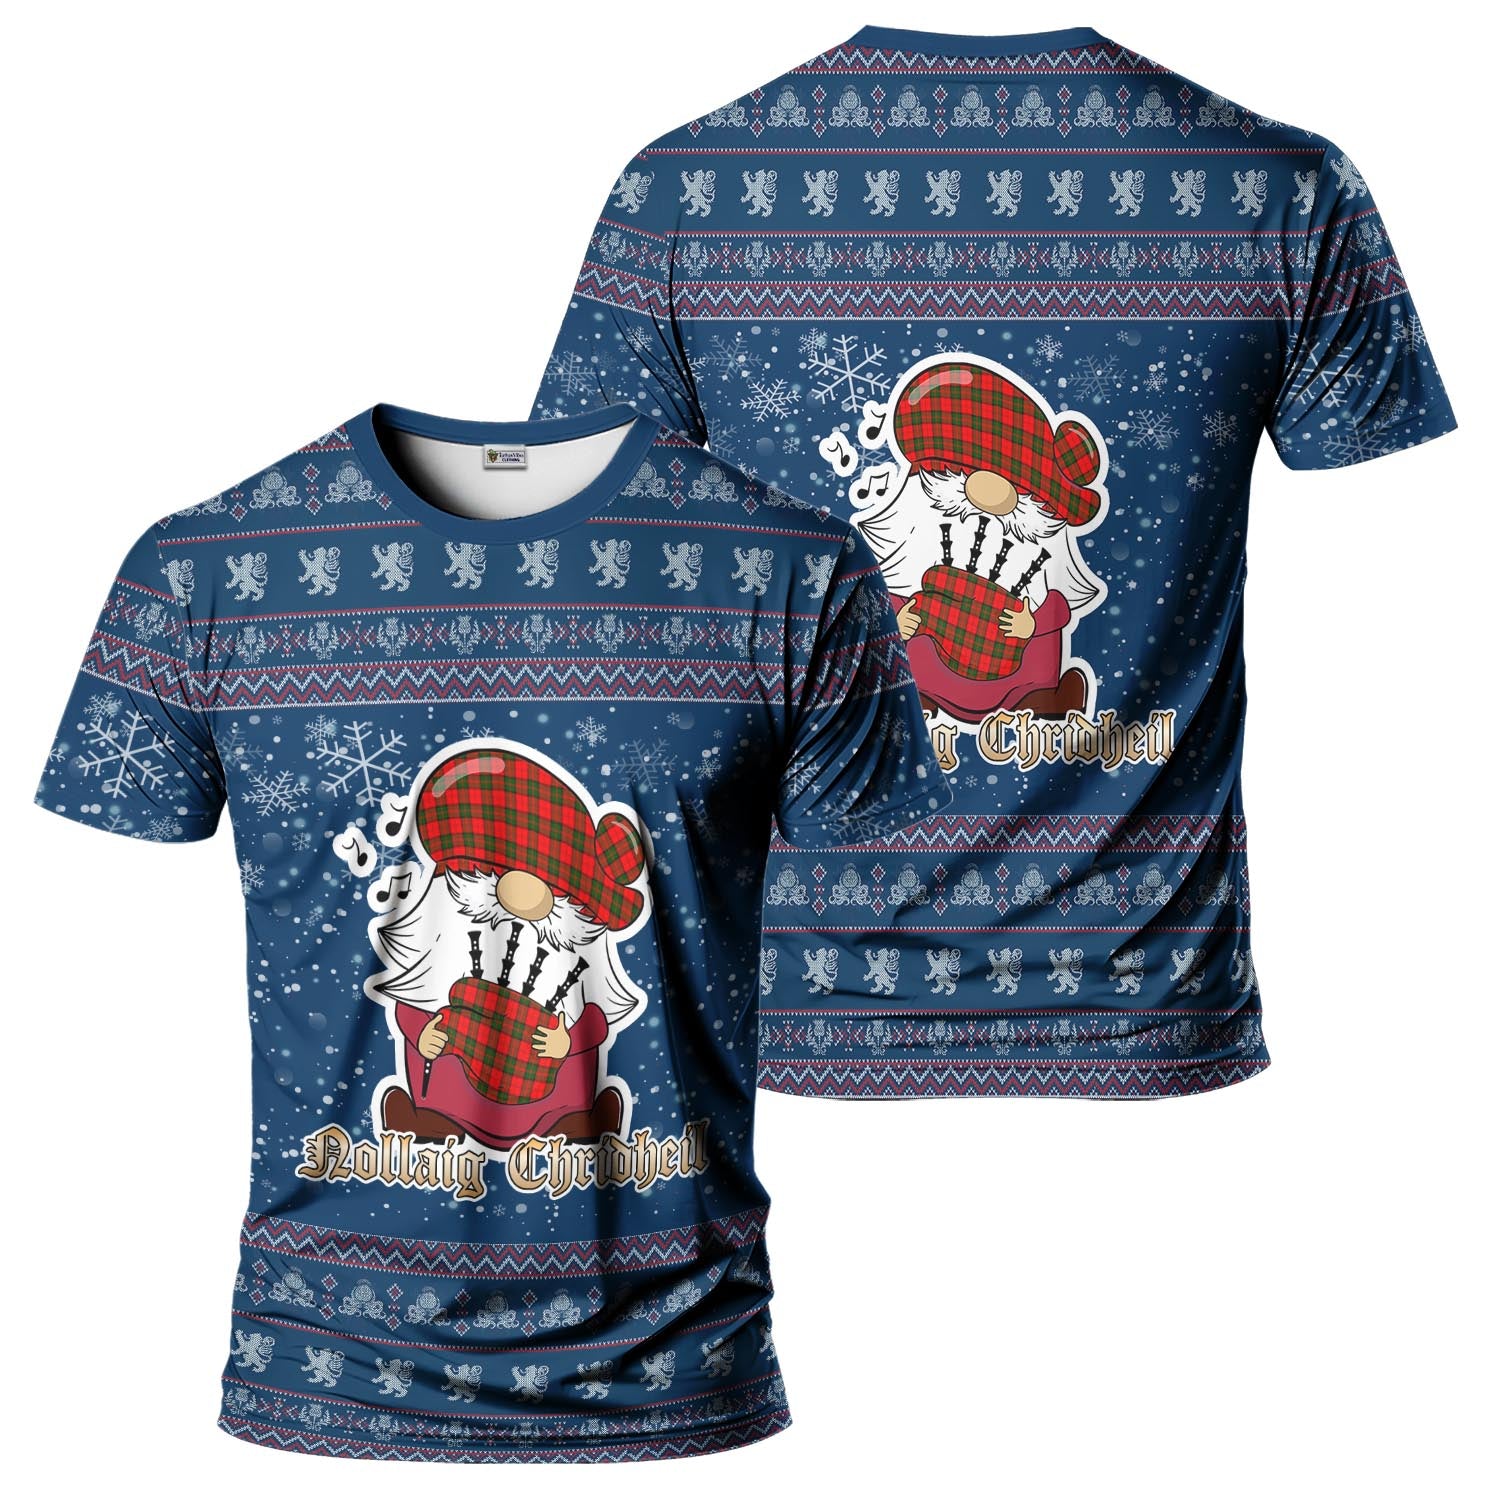 Dunbar Modern Clan Christmas Family T-Shirt with Funny Gnome Playing Bagpipes Kid's Shirt Blue - Tartanvibesclothing